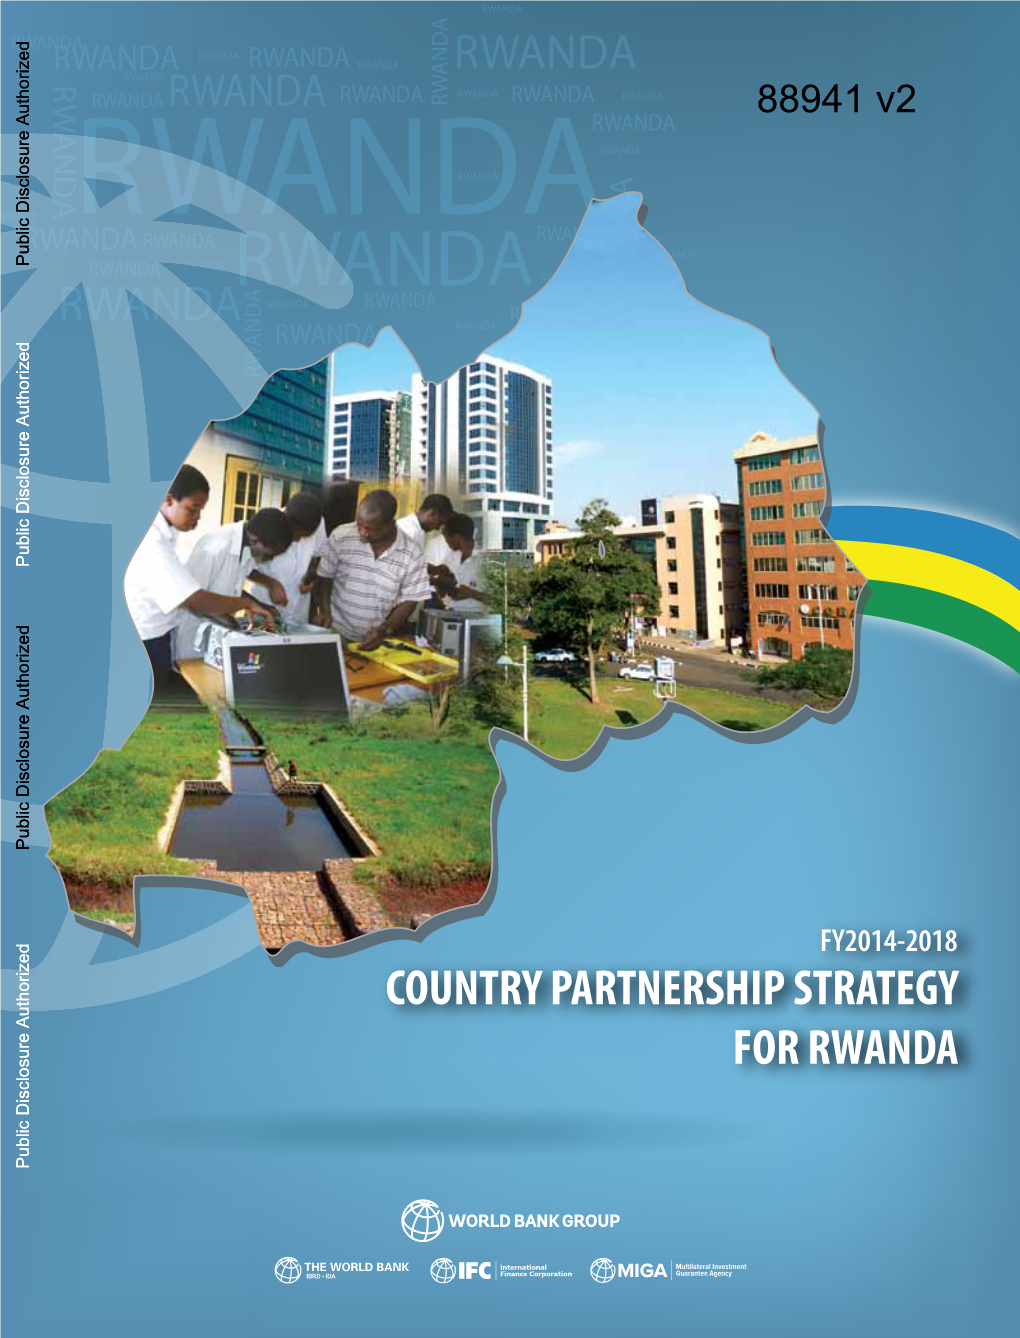 II. Rwanda's Progress and Prospects